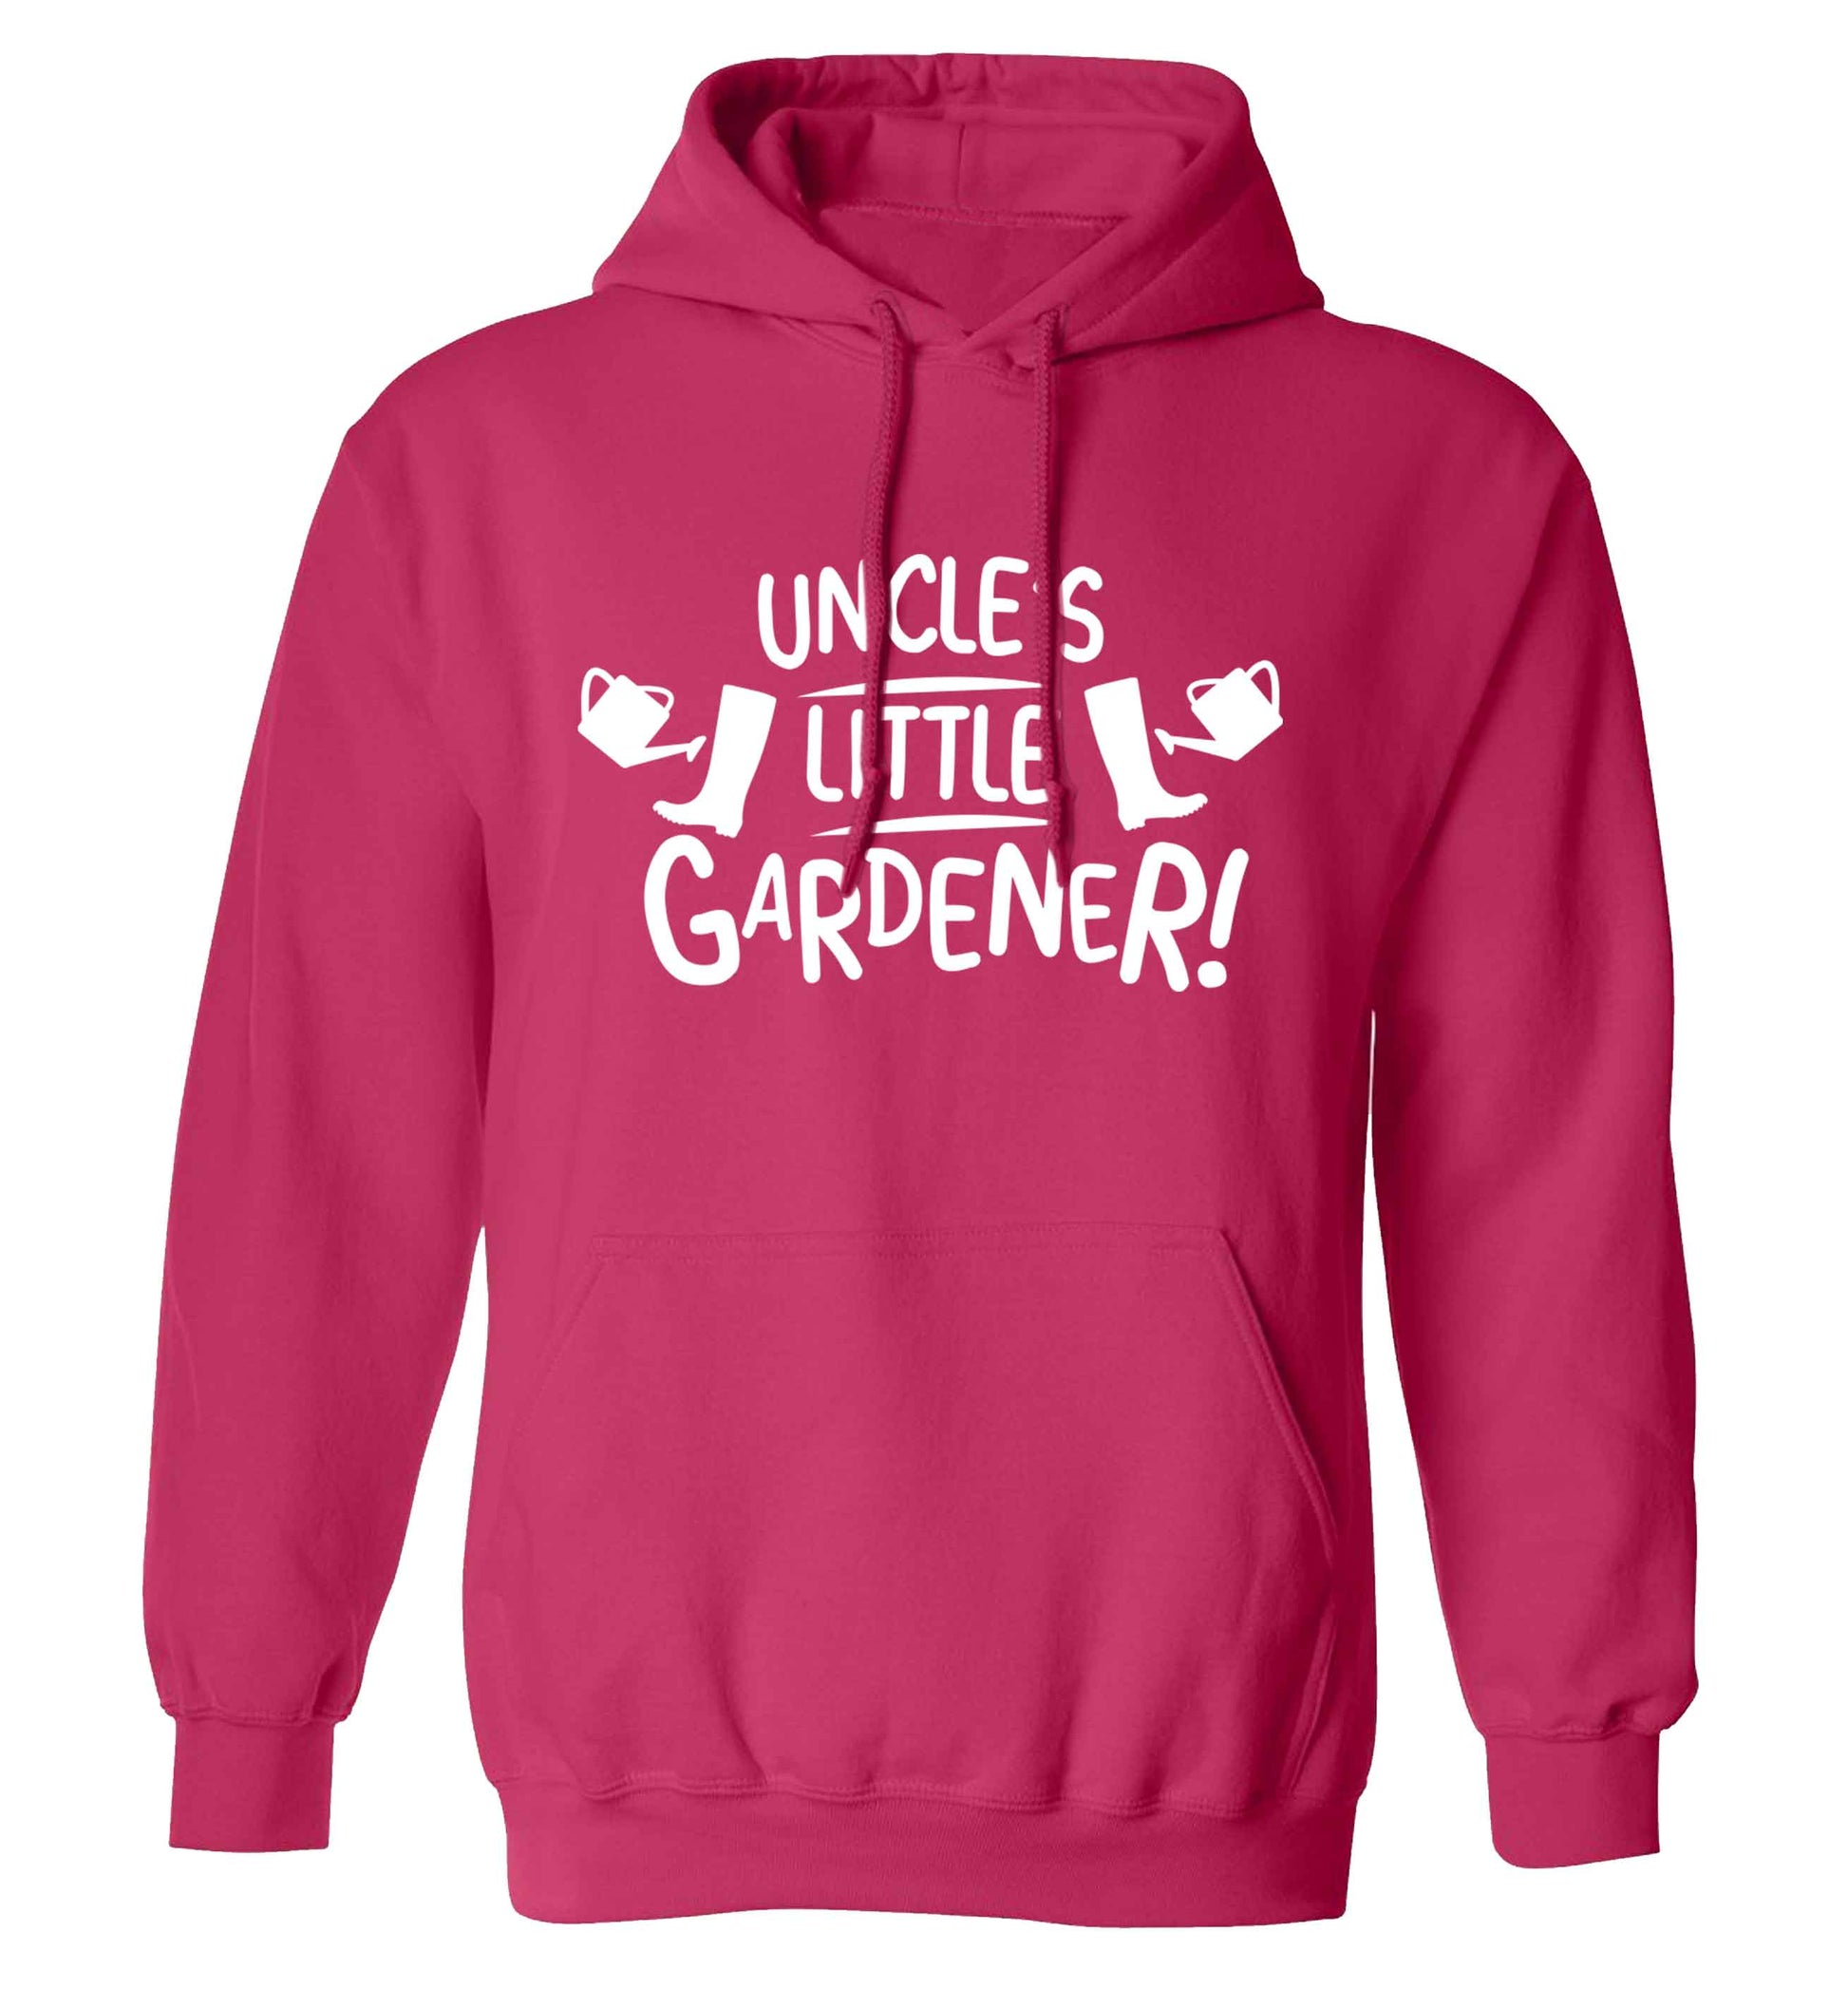 Uncle's little gardener adults unisex pink hoodie 2XL